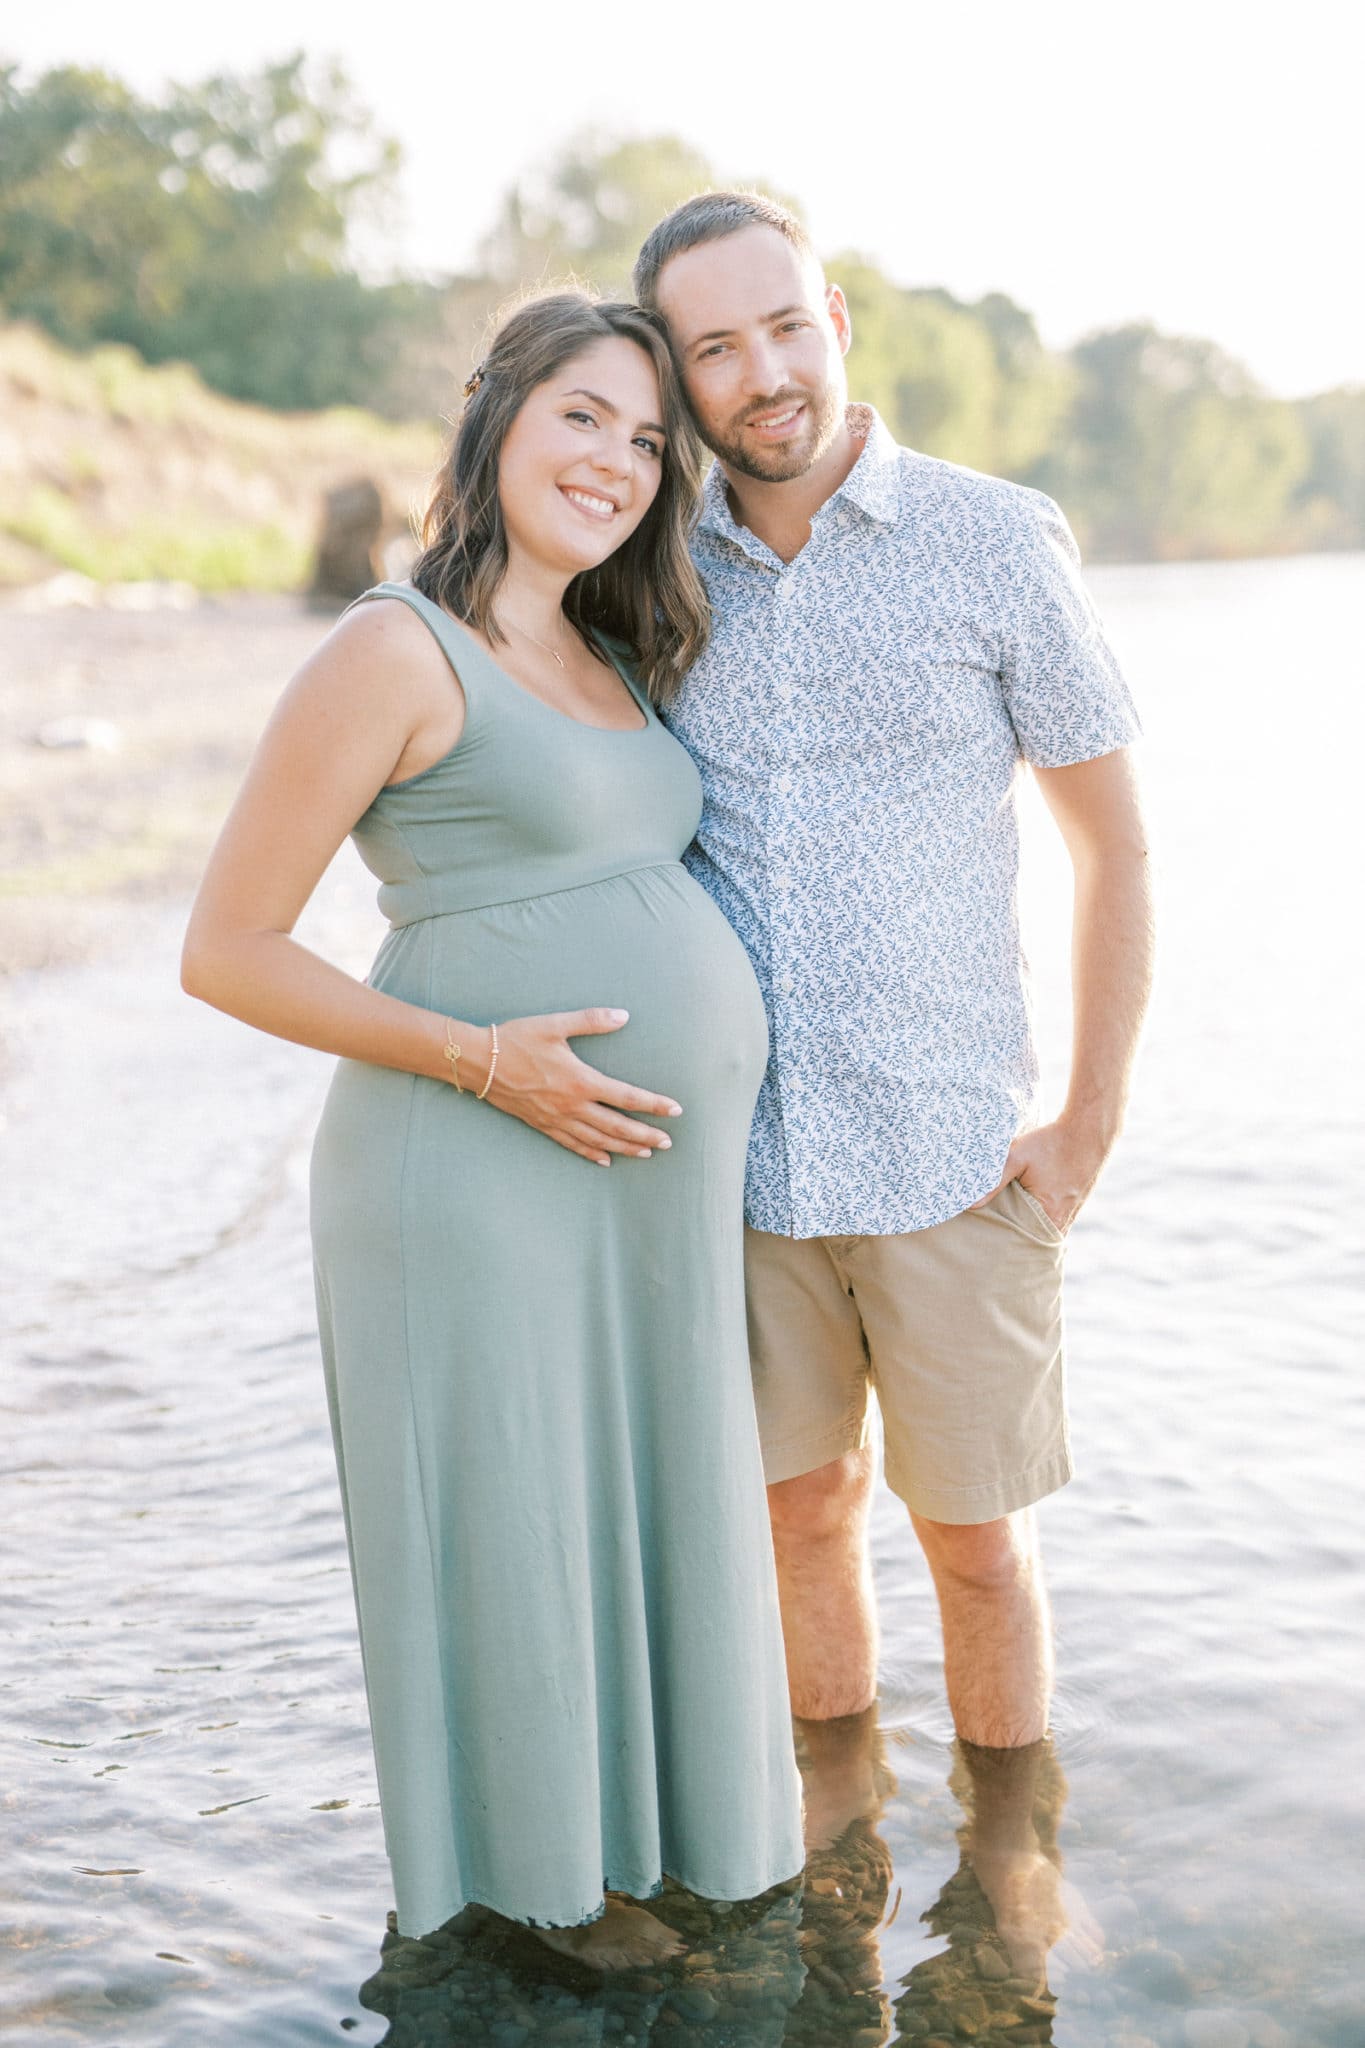 What Should I Wear to My Maternity Photoshoot? Niagara Photographer